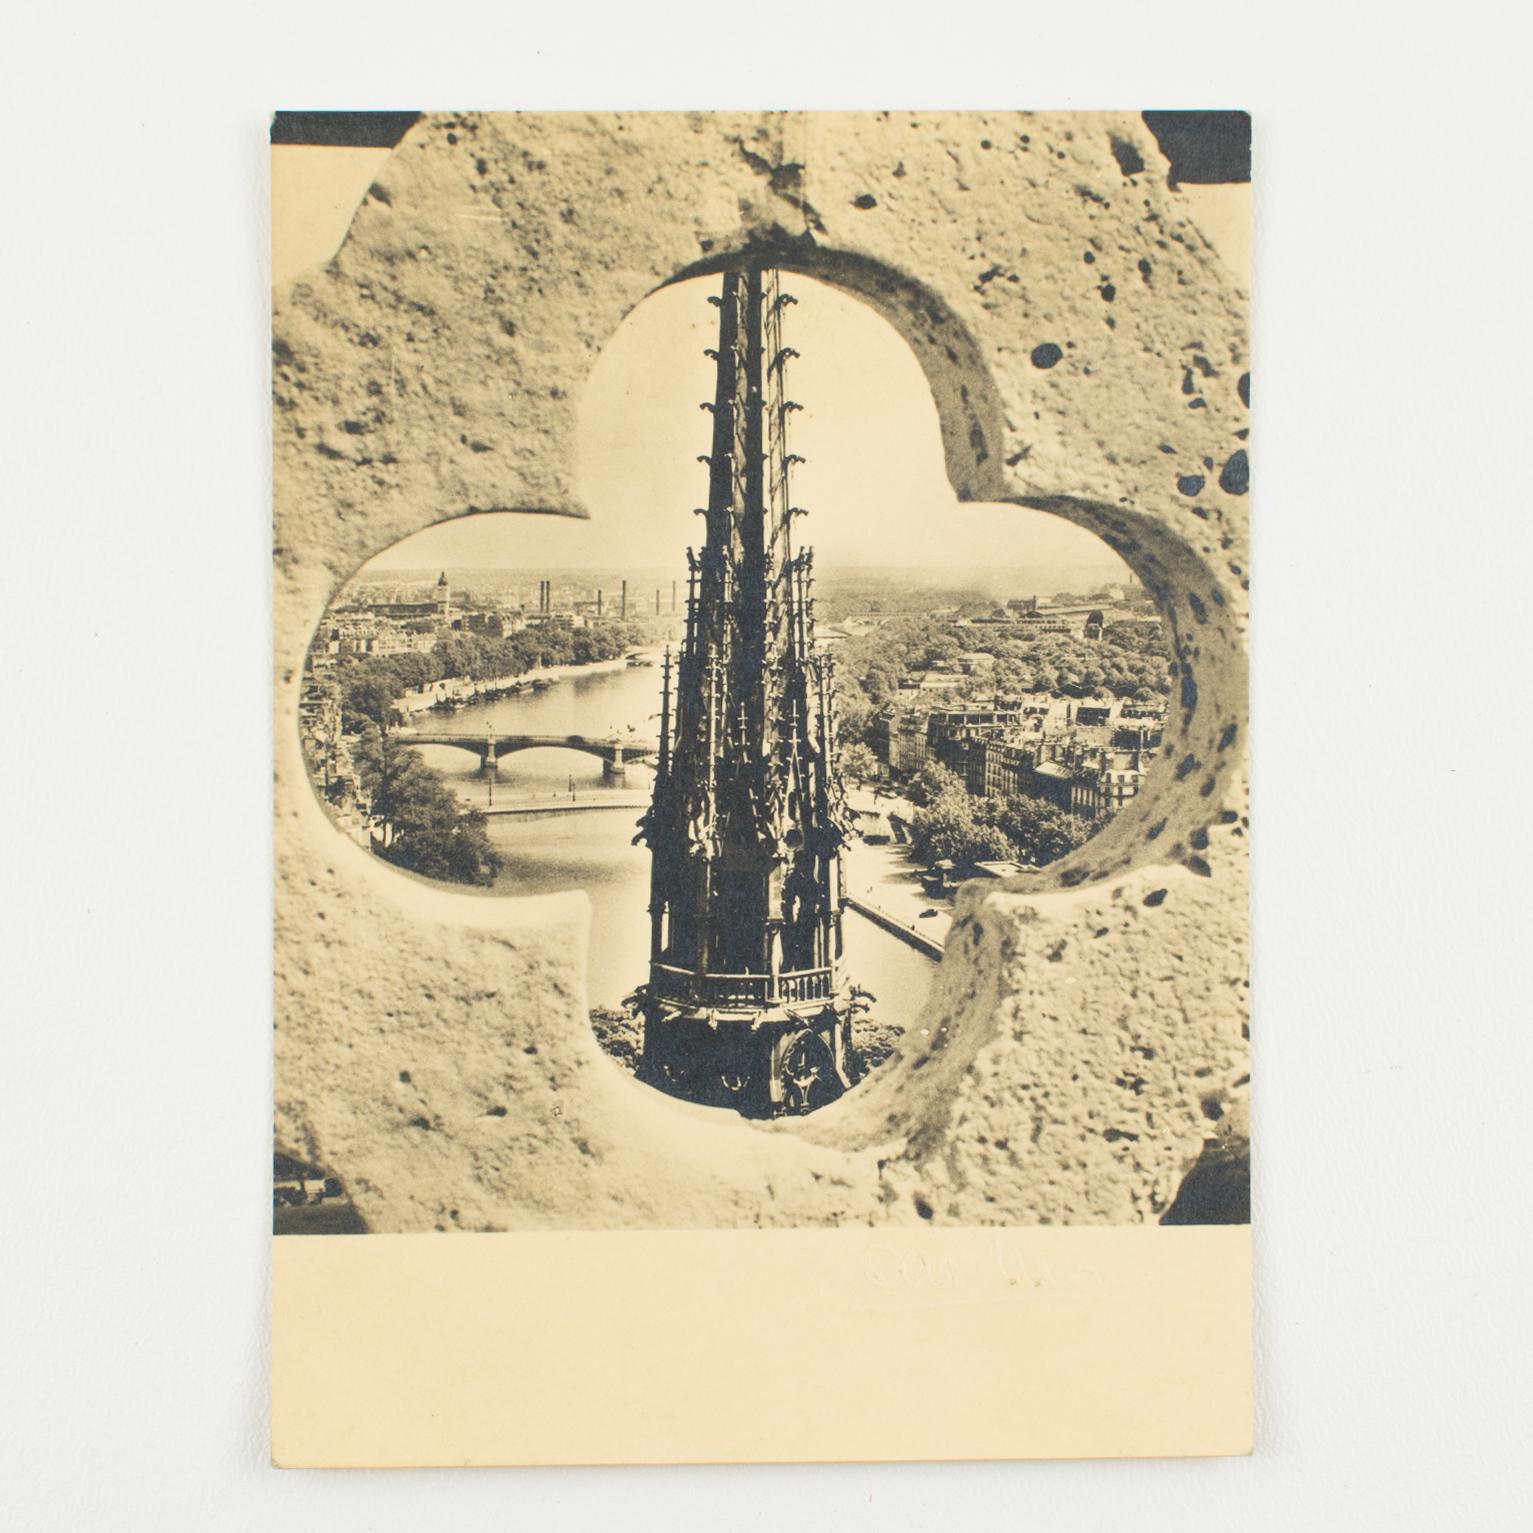 An original silver gelatin black and white photography postcard by Albert Monier, Paris. Notre Dame Cathedral, circa 1950.
Features:
This original silver gelatin print photography postcard is unframed.
Photographer: Albert Monier (1915 -